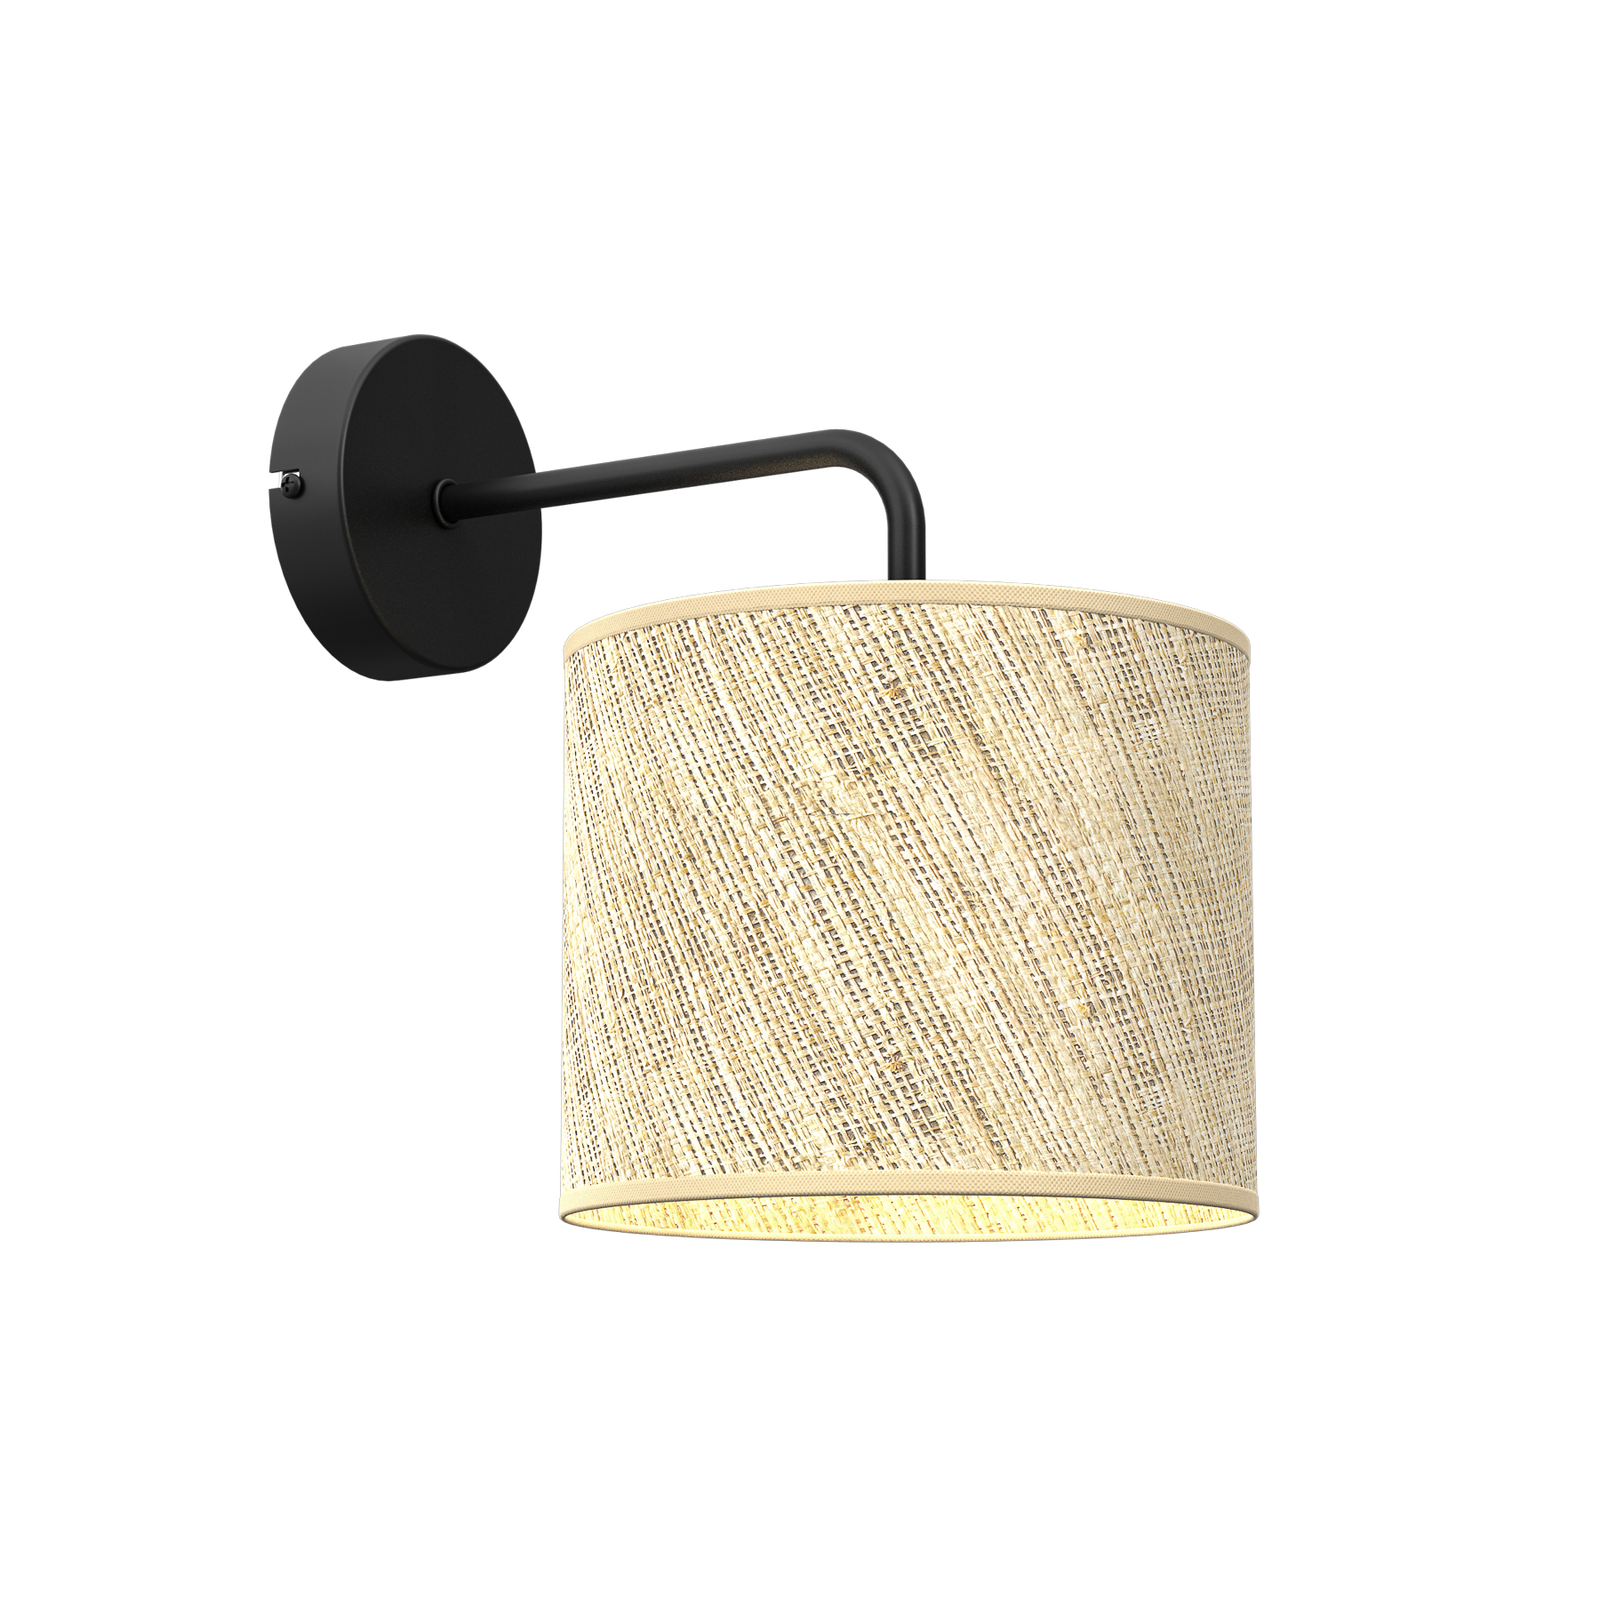 Jovin wall light, one-bulb, rattan lampshade